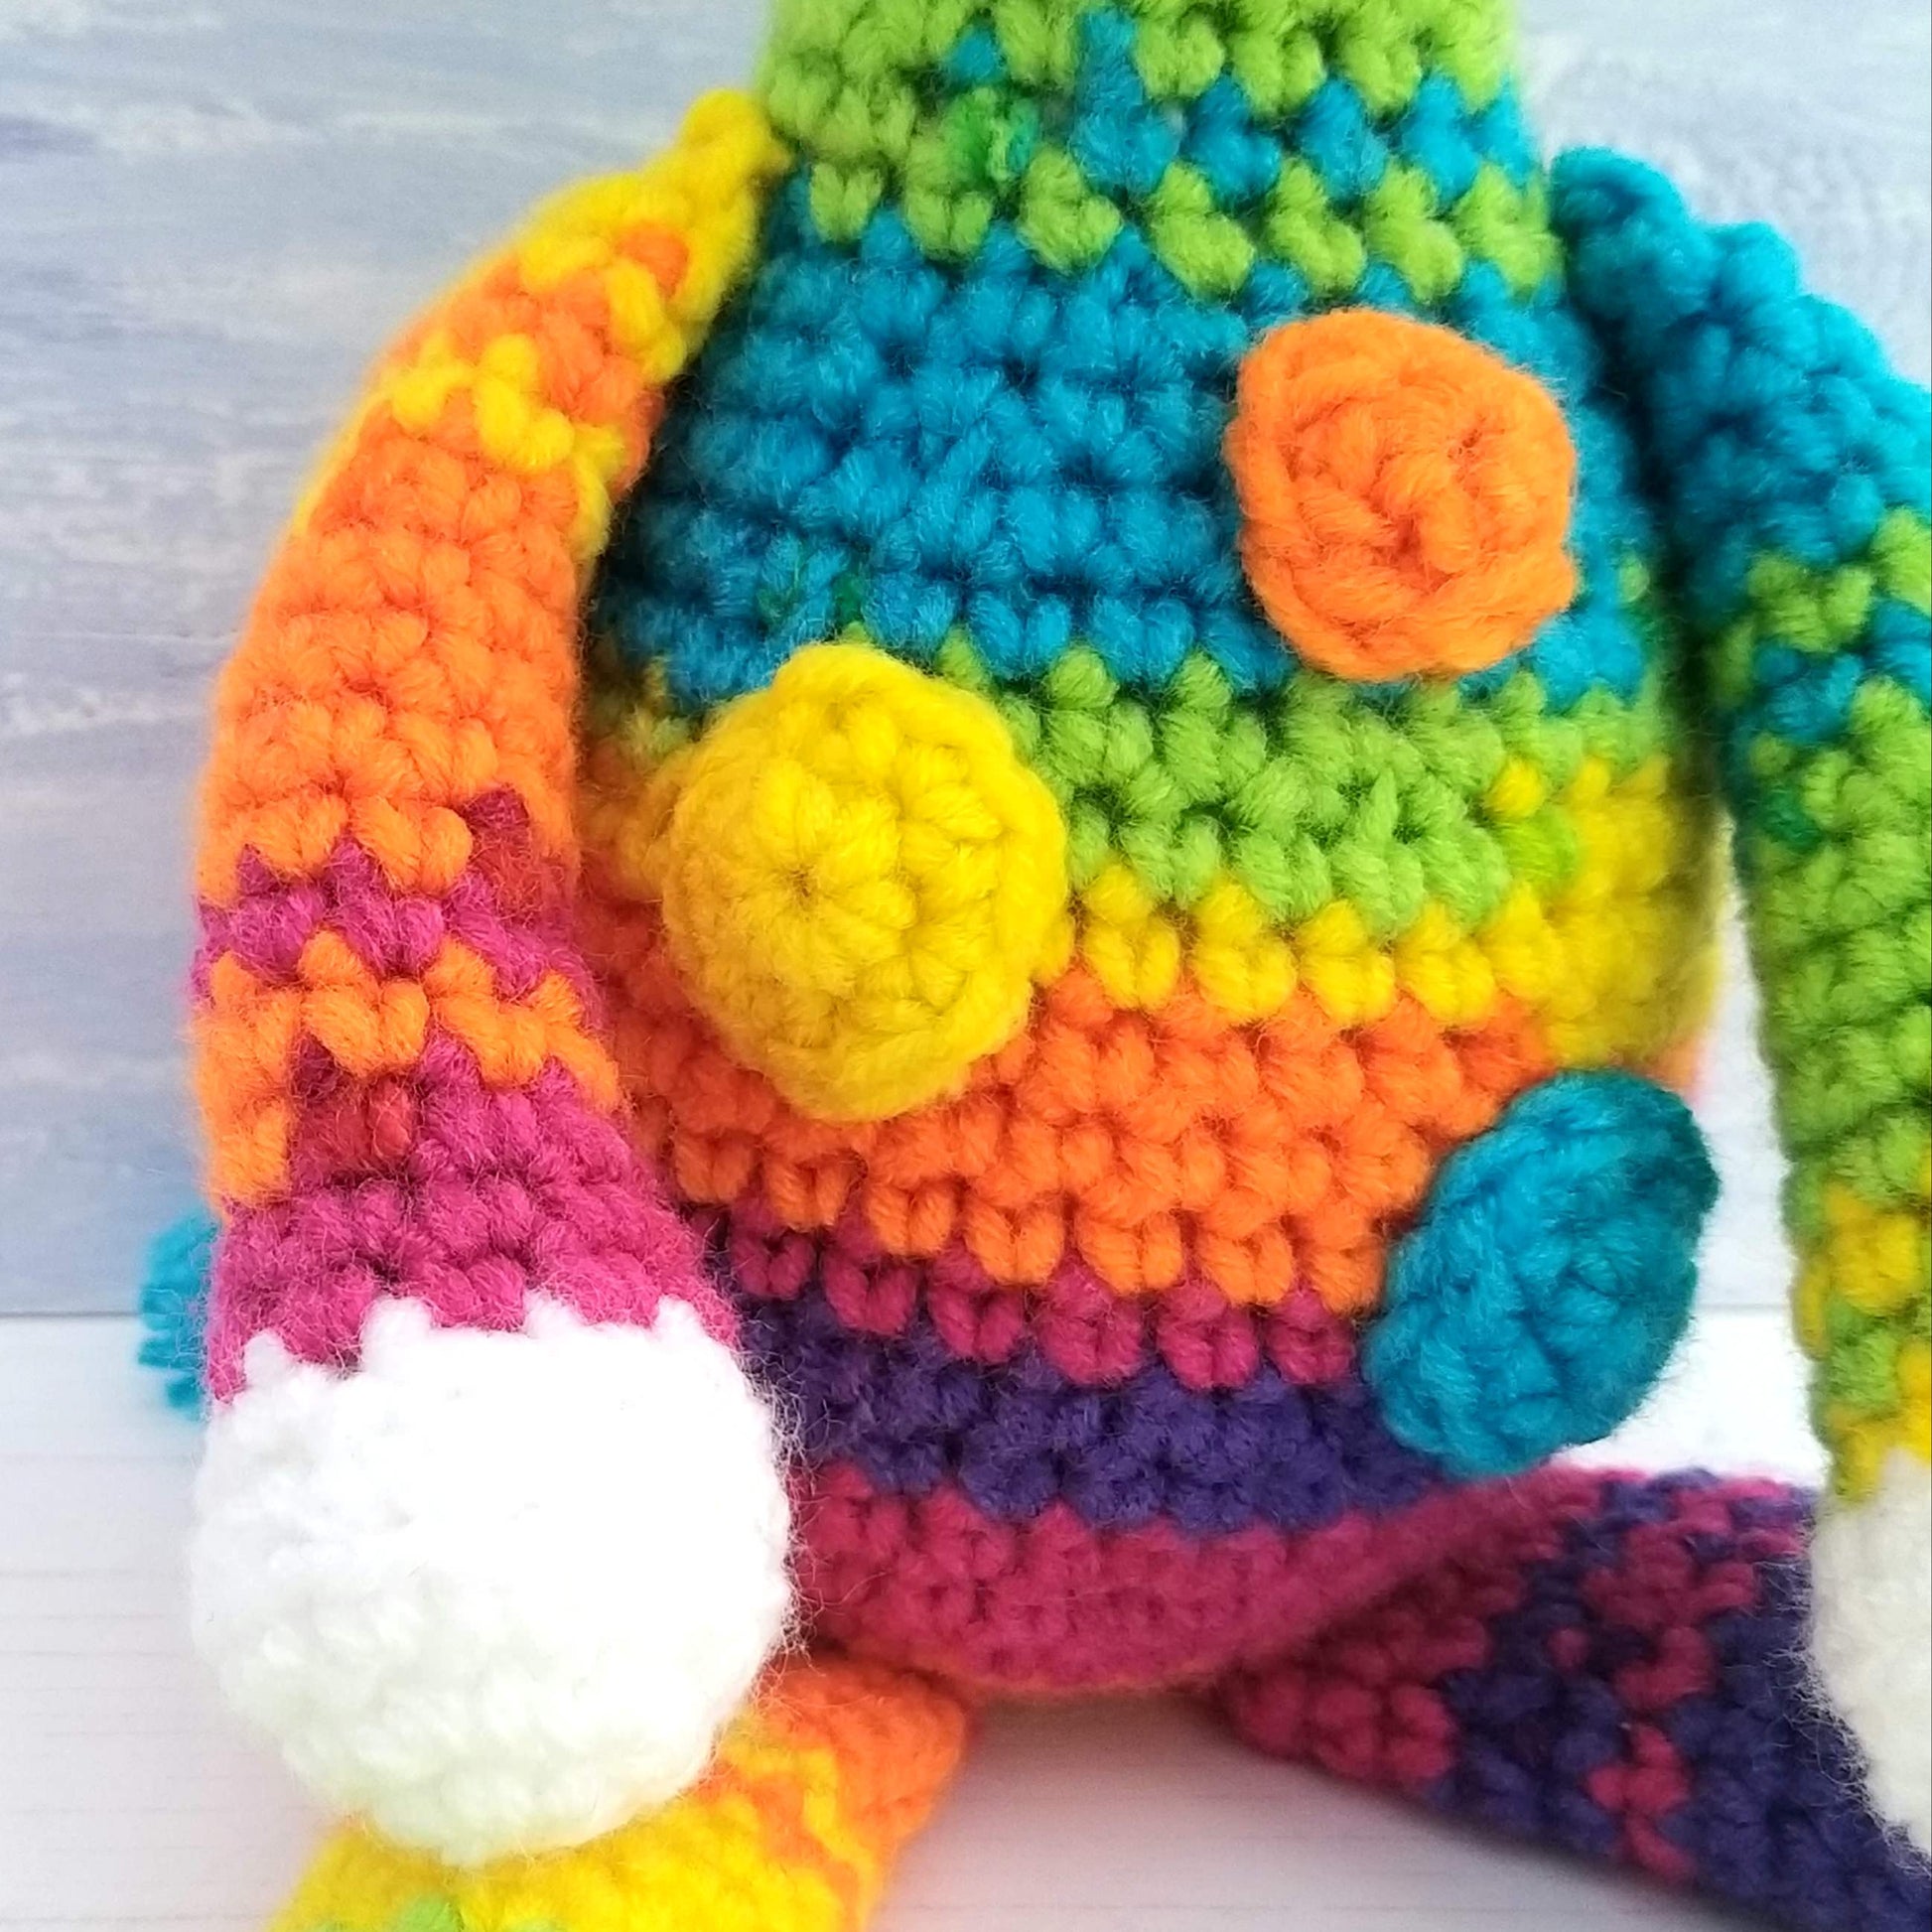 Crochet Stitch Details - Body of toy giraffe